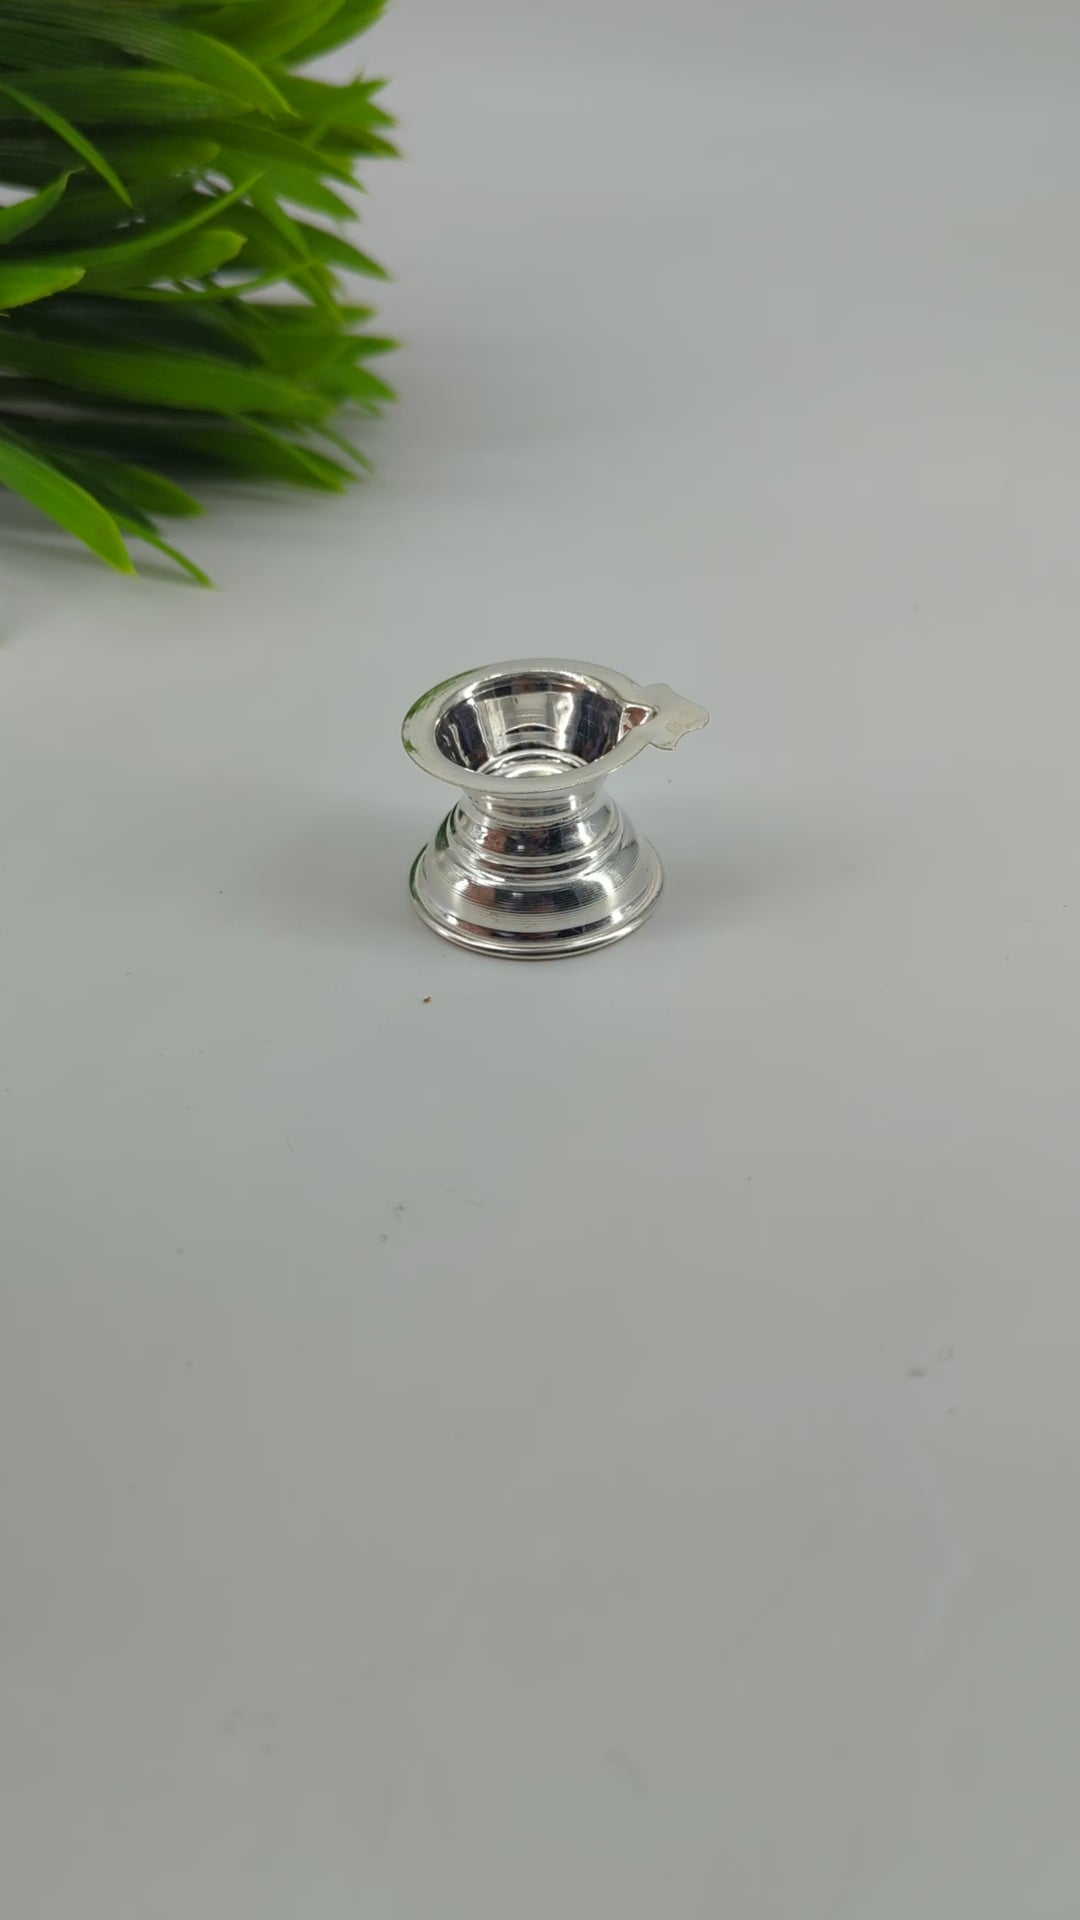 925 silver Deepam / lamp / diya / festival collection - return gifts